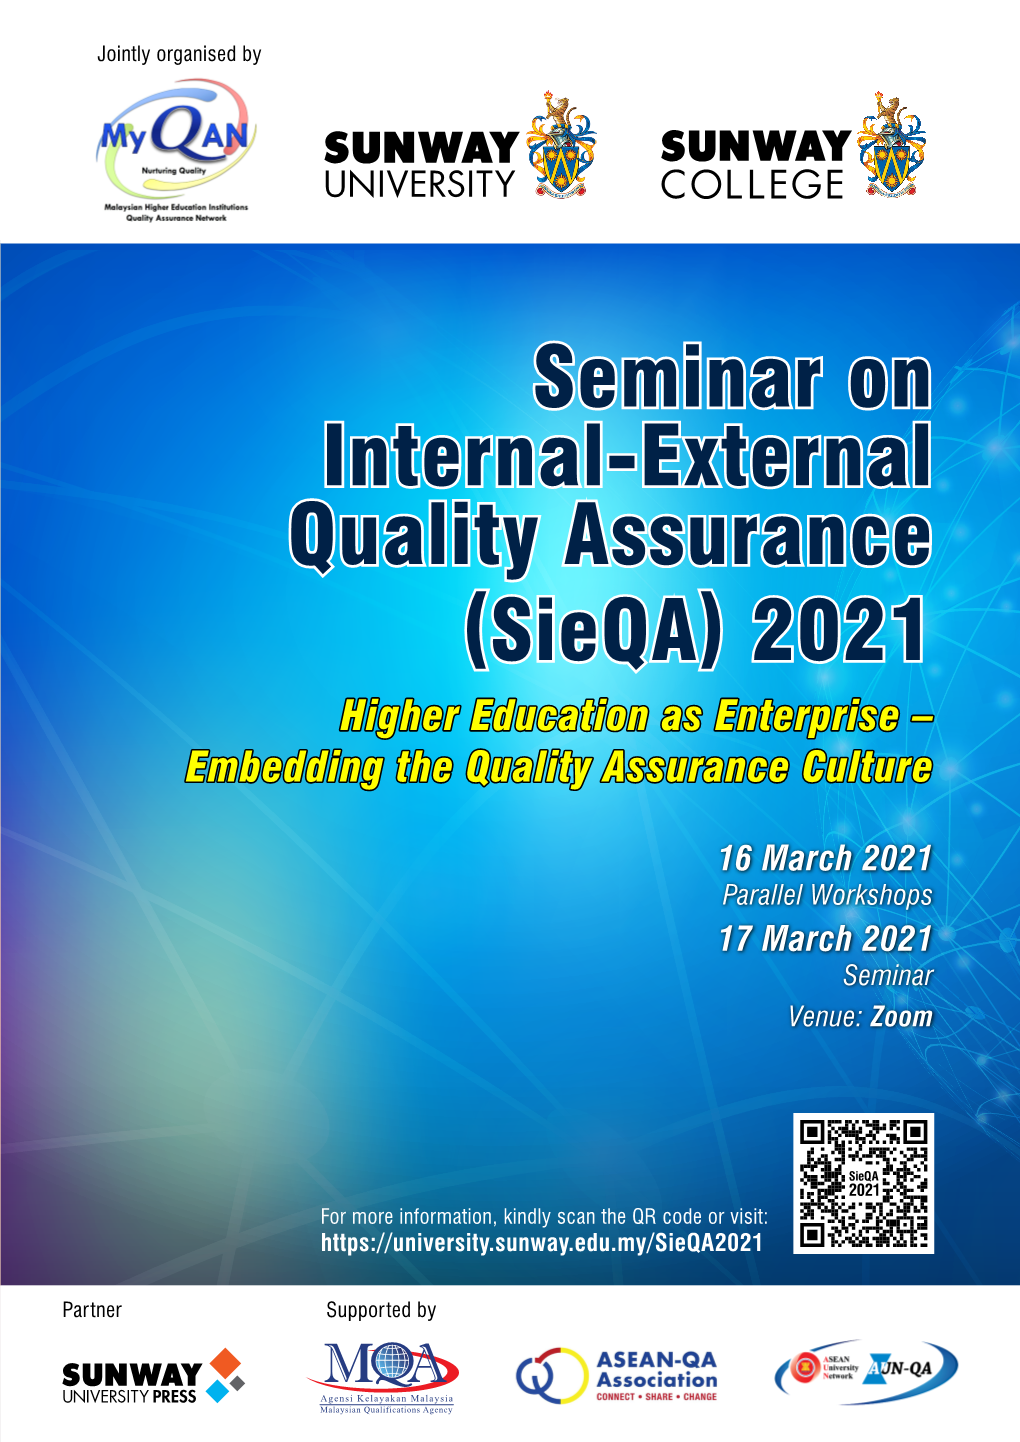 2021 Seminar on Internal-External Quality Assurance (Sieqa)